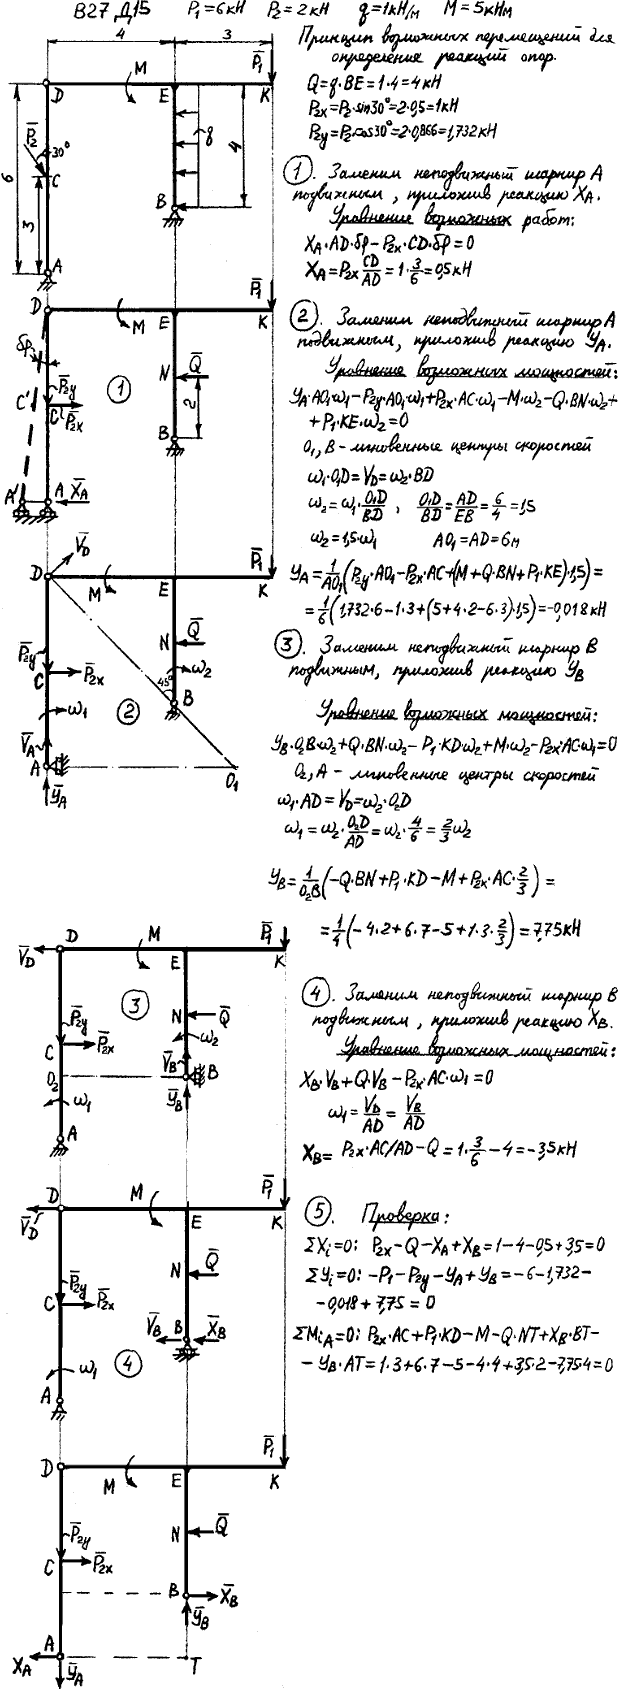 Задание Д.15 вариант 27. P1=6 кН, P2=2 кН, q=1 кН/м, M=5 кН*м